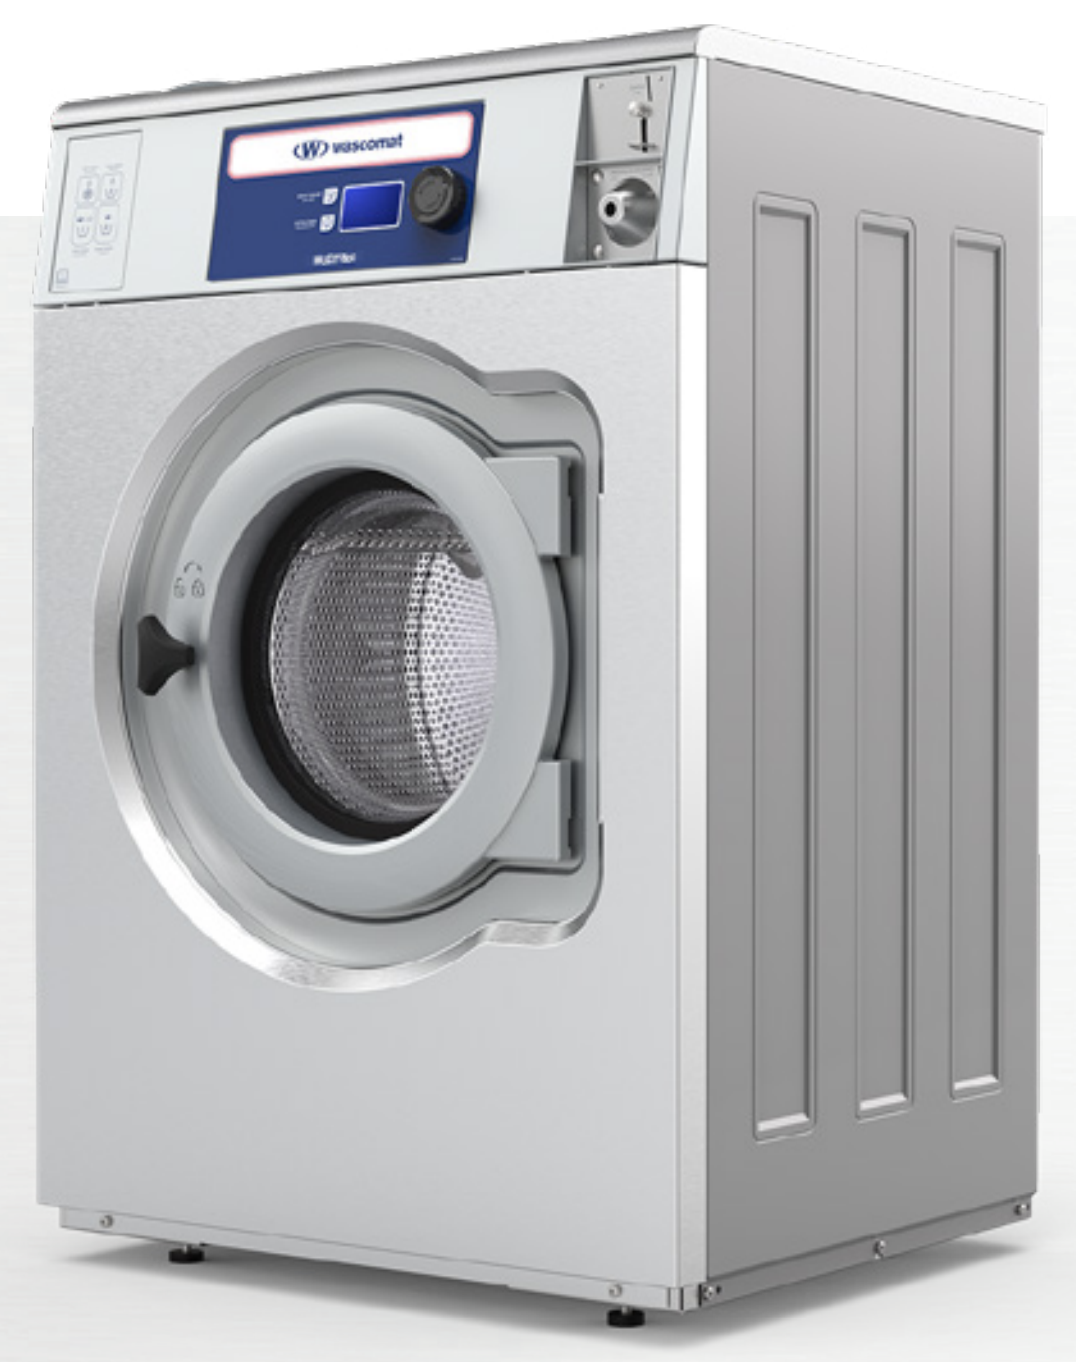 New 2022 Wascomat Wud745 - Automatic Laundry Service Of Va, Inc.